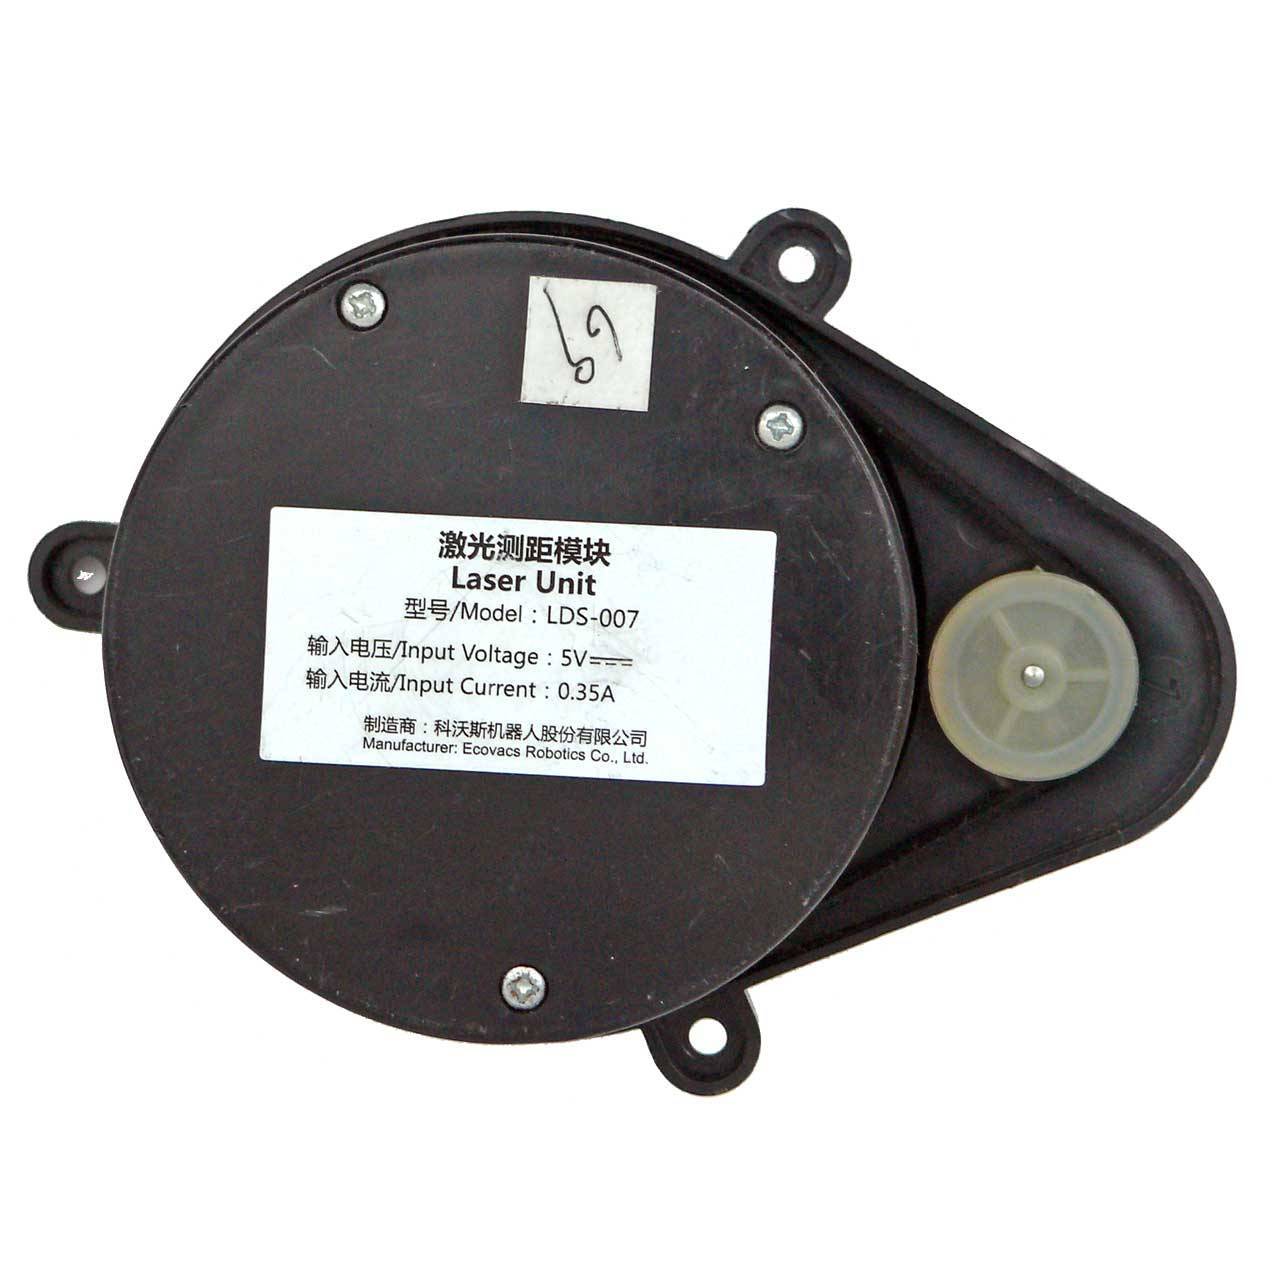 Deebot Ozmo Lidar Sensor LDS-007 used